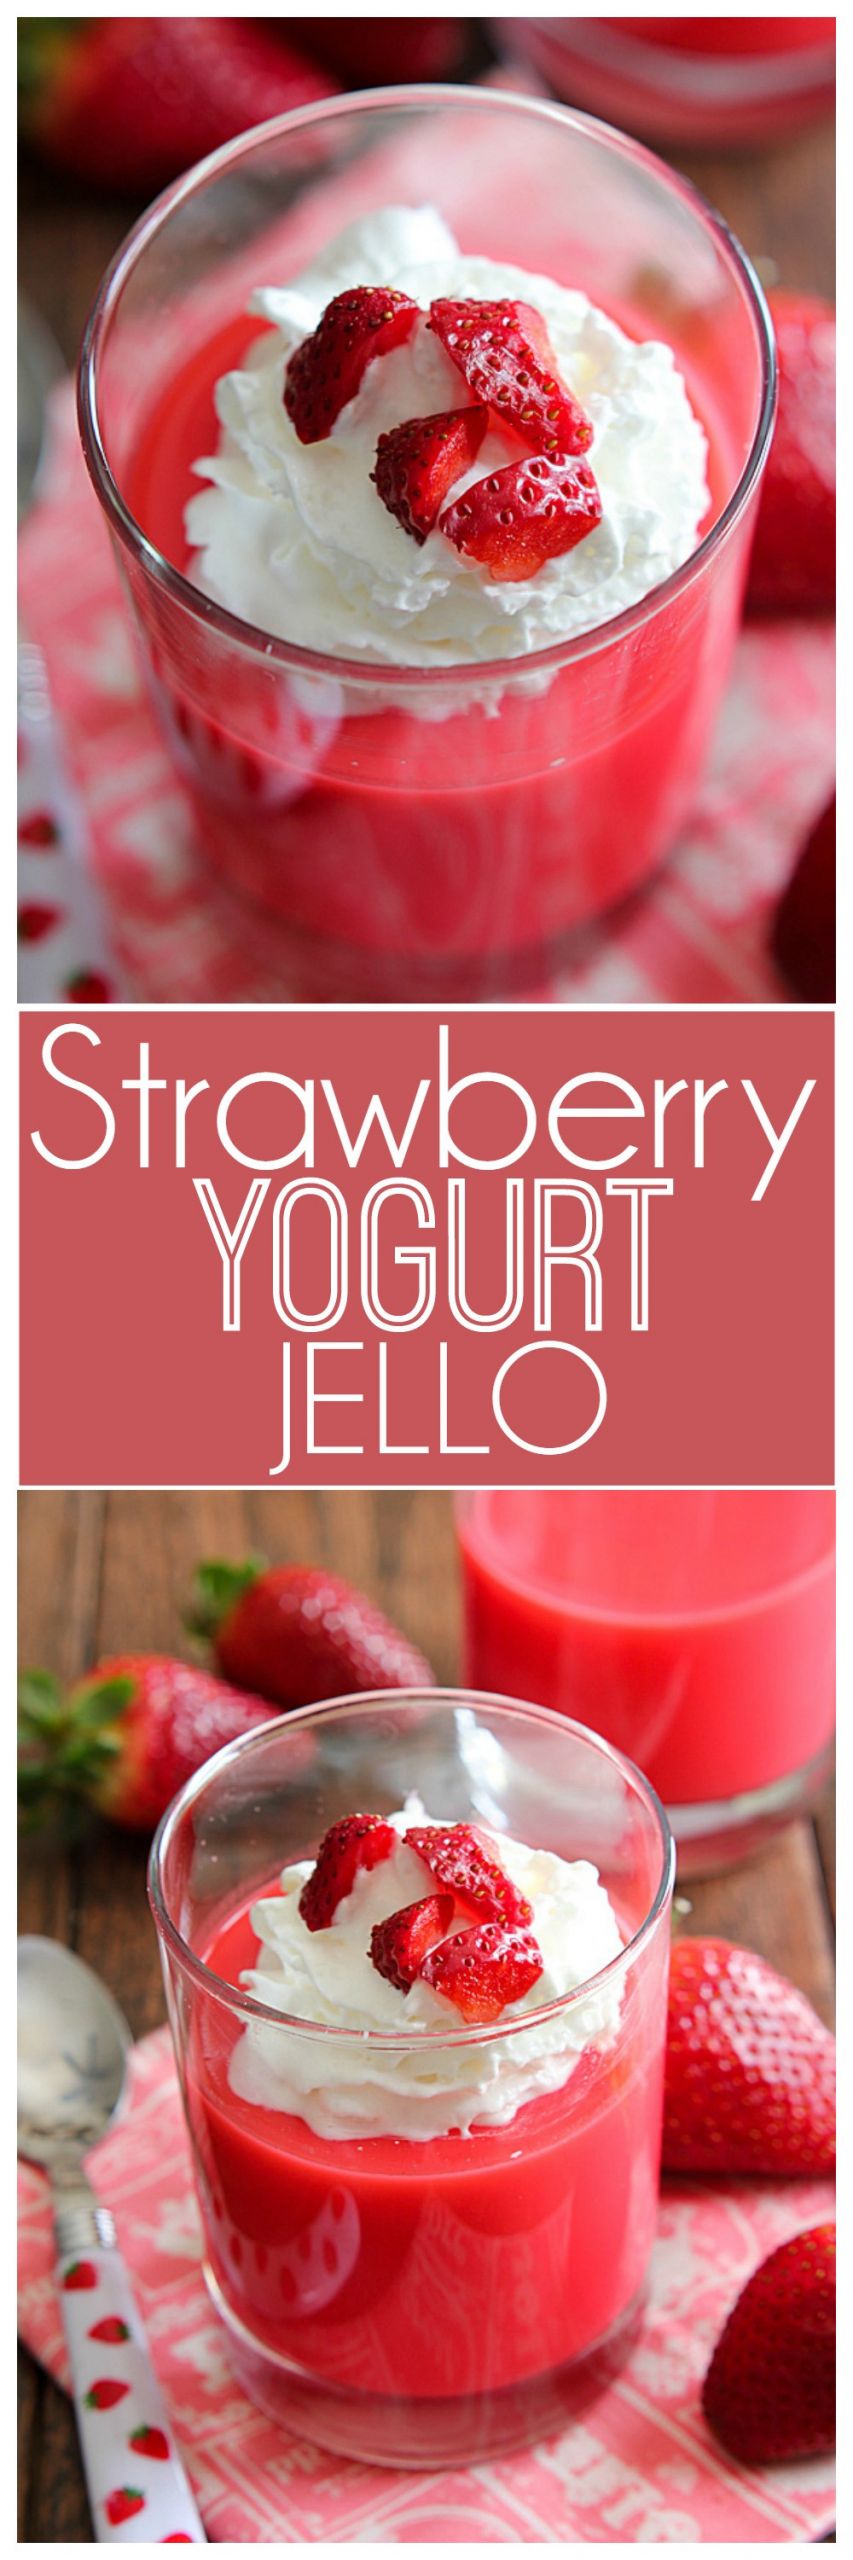 Yogurt Dessert Recipe
 Strawberry Yogurt Jello